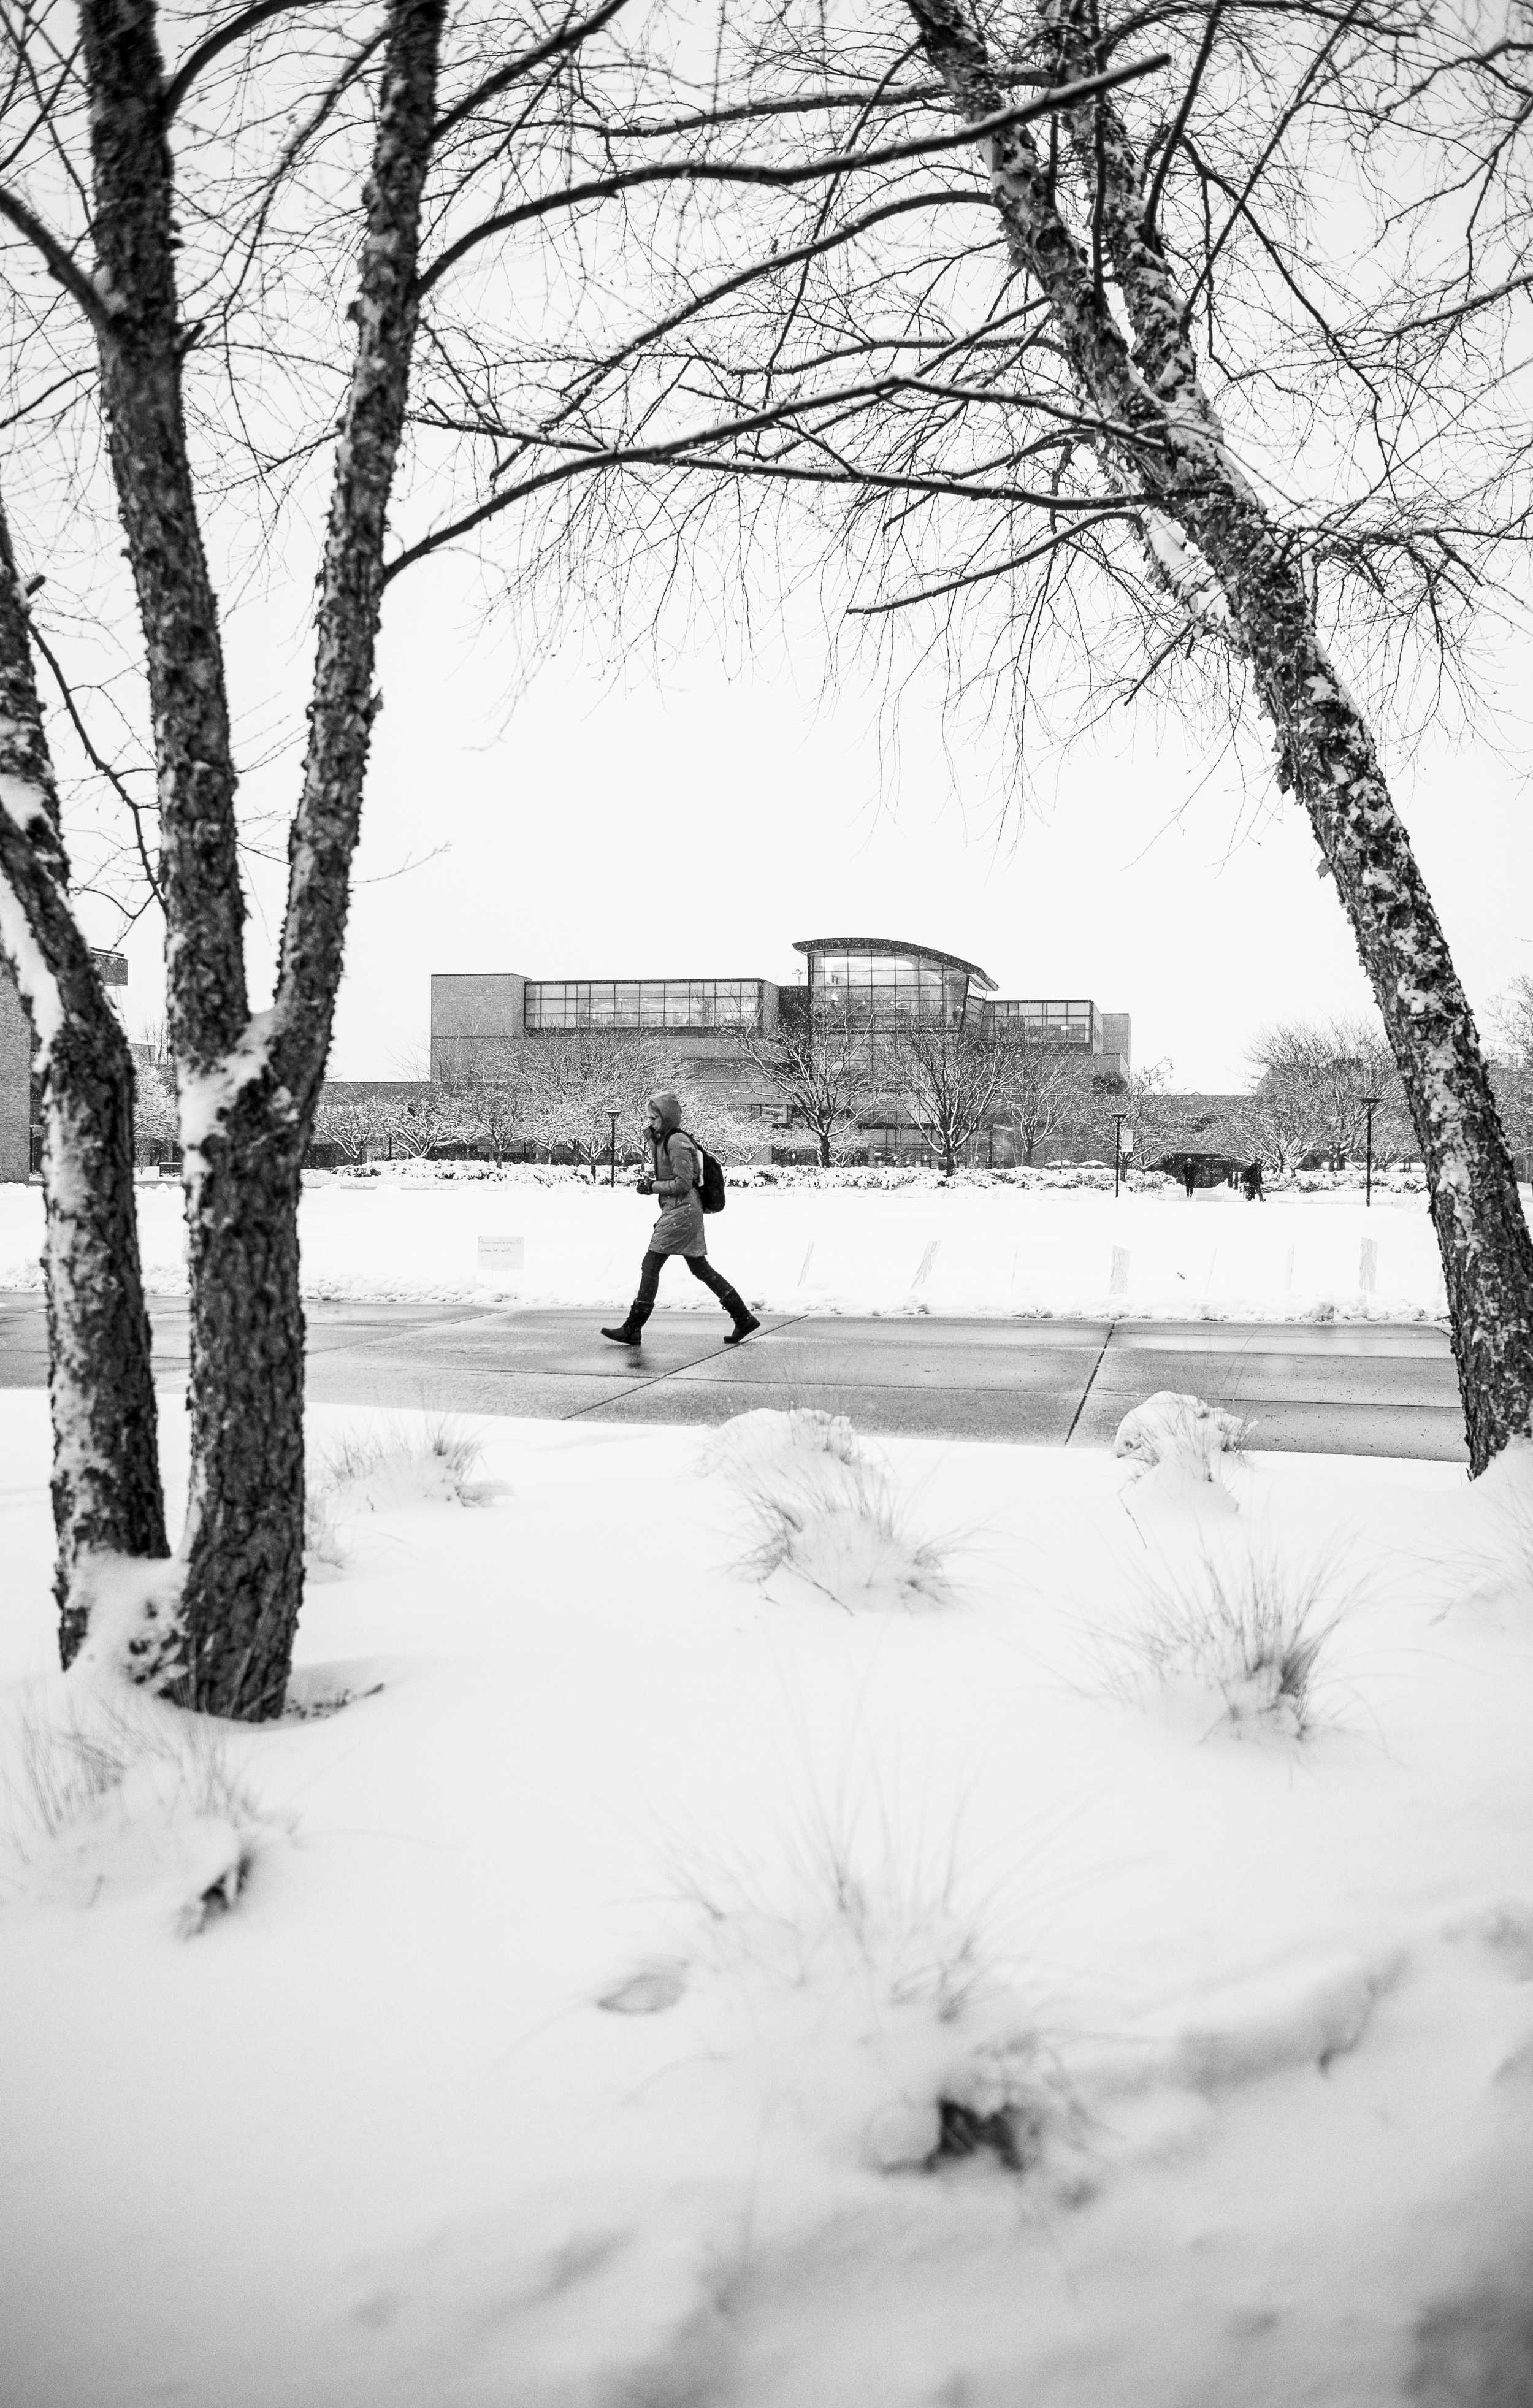 Winter Scenics 2-9 by Michael Randolph DSC_2204-Edit.JPG